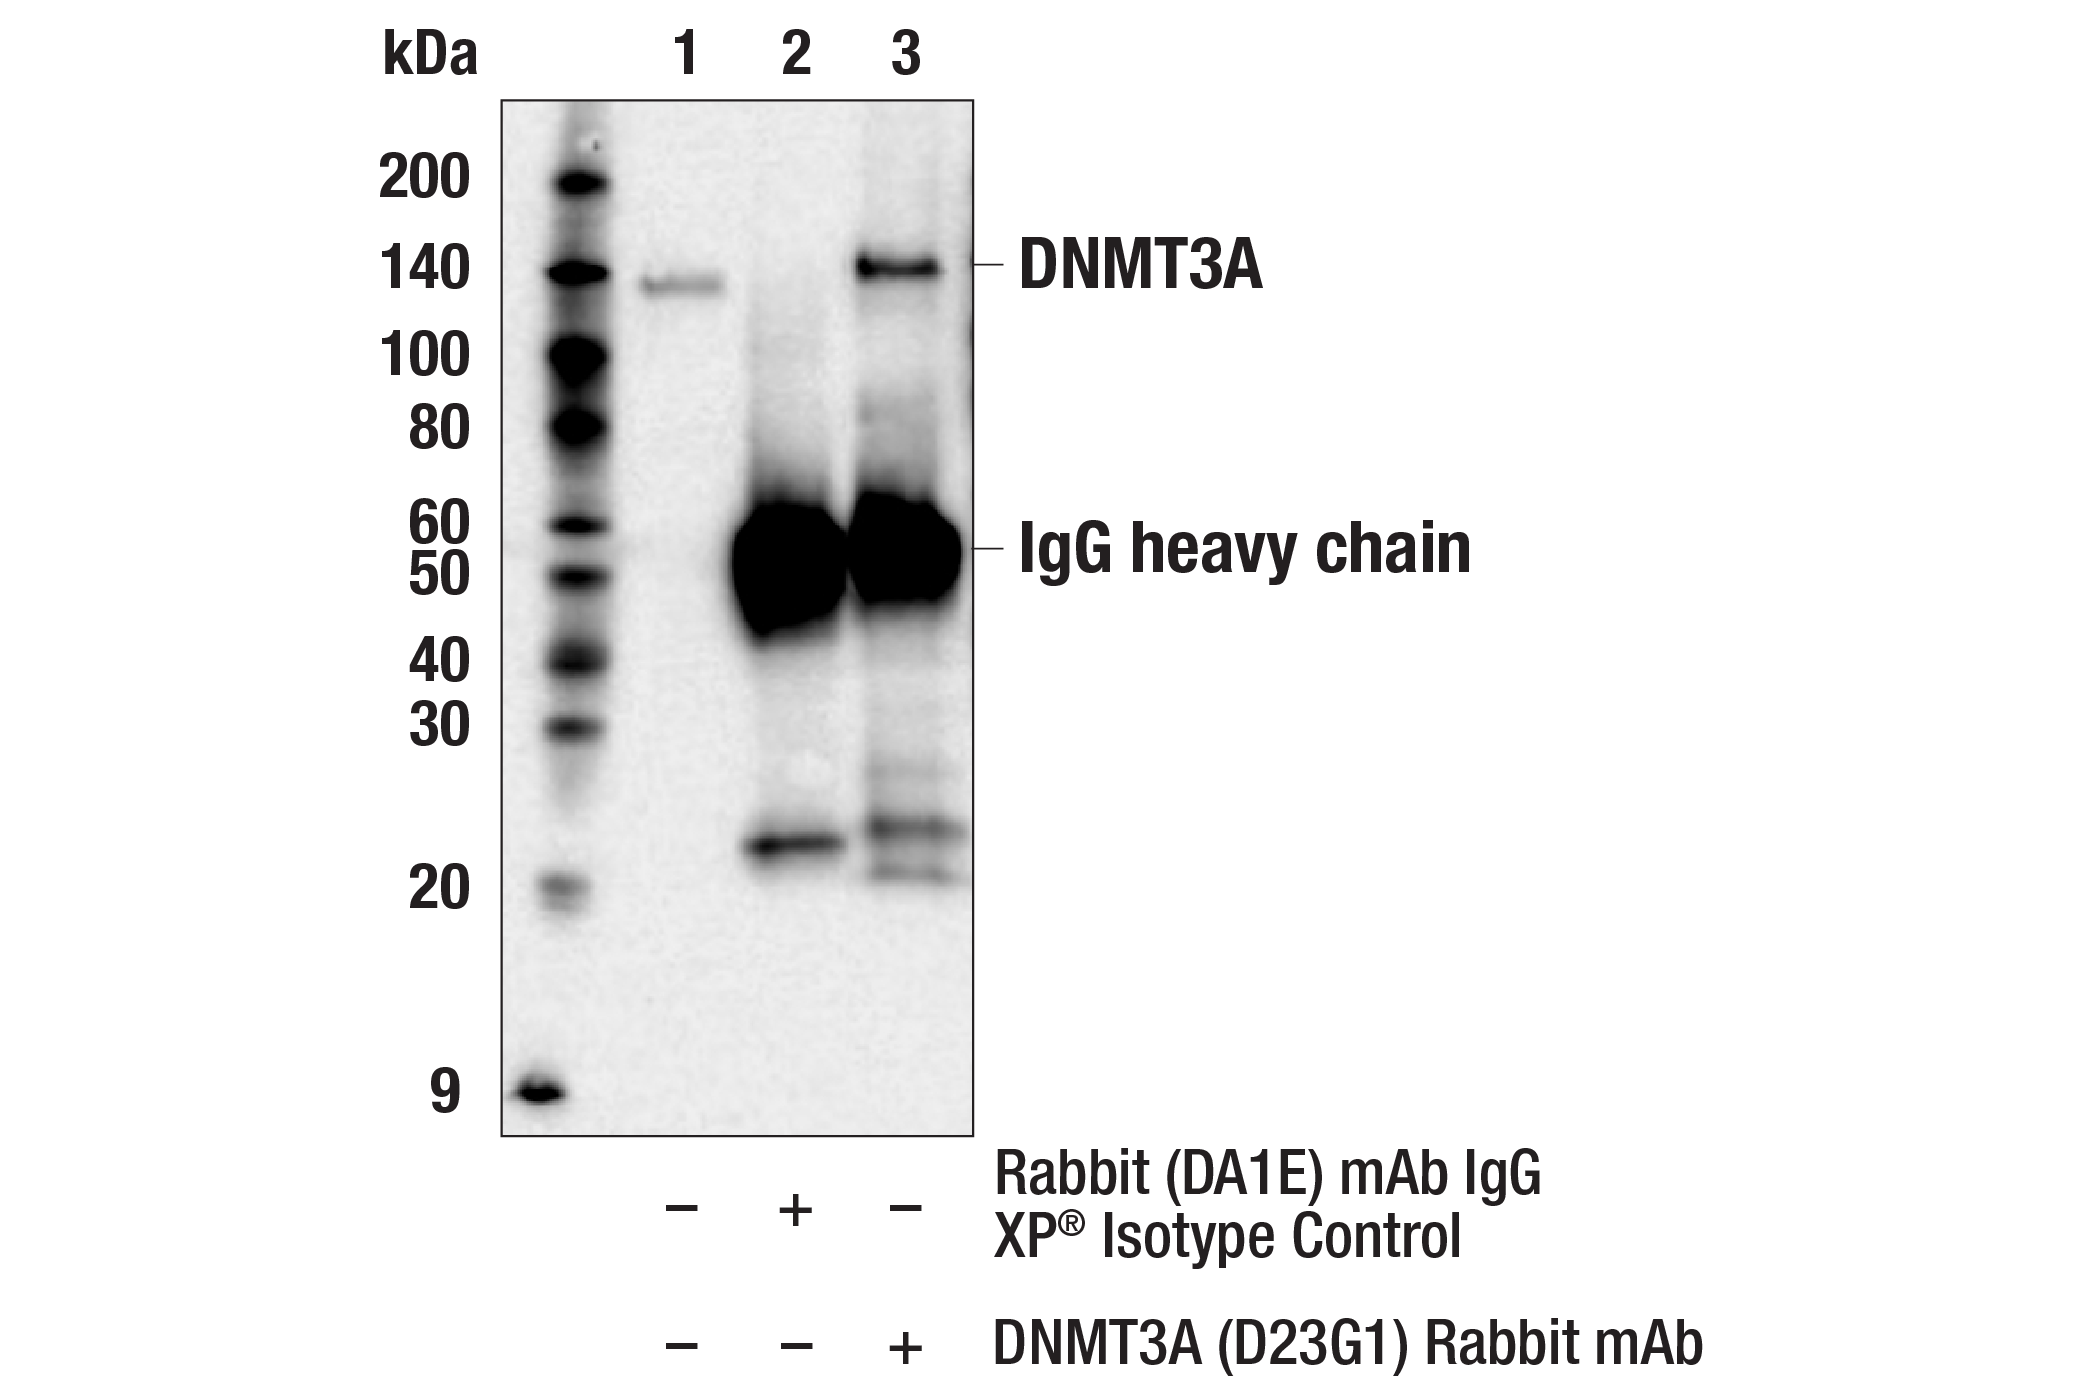  Image 1: DNMT3A Antibody Sampler Kit